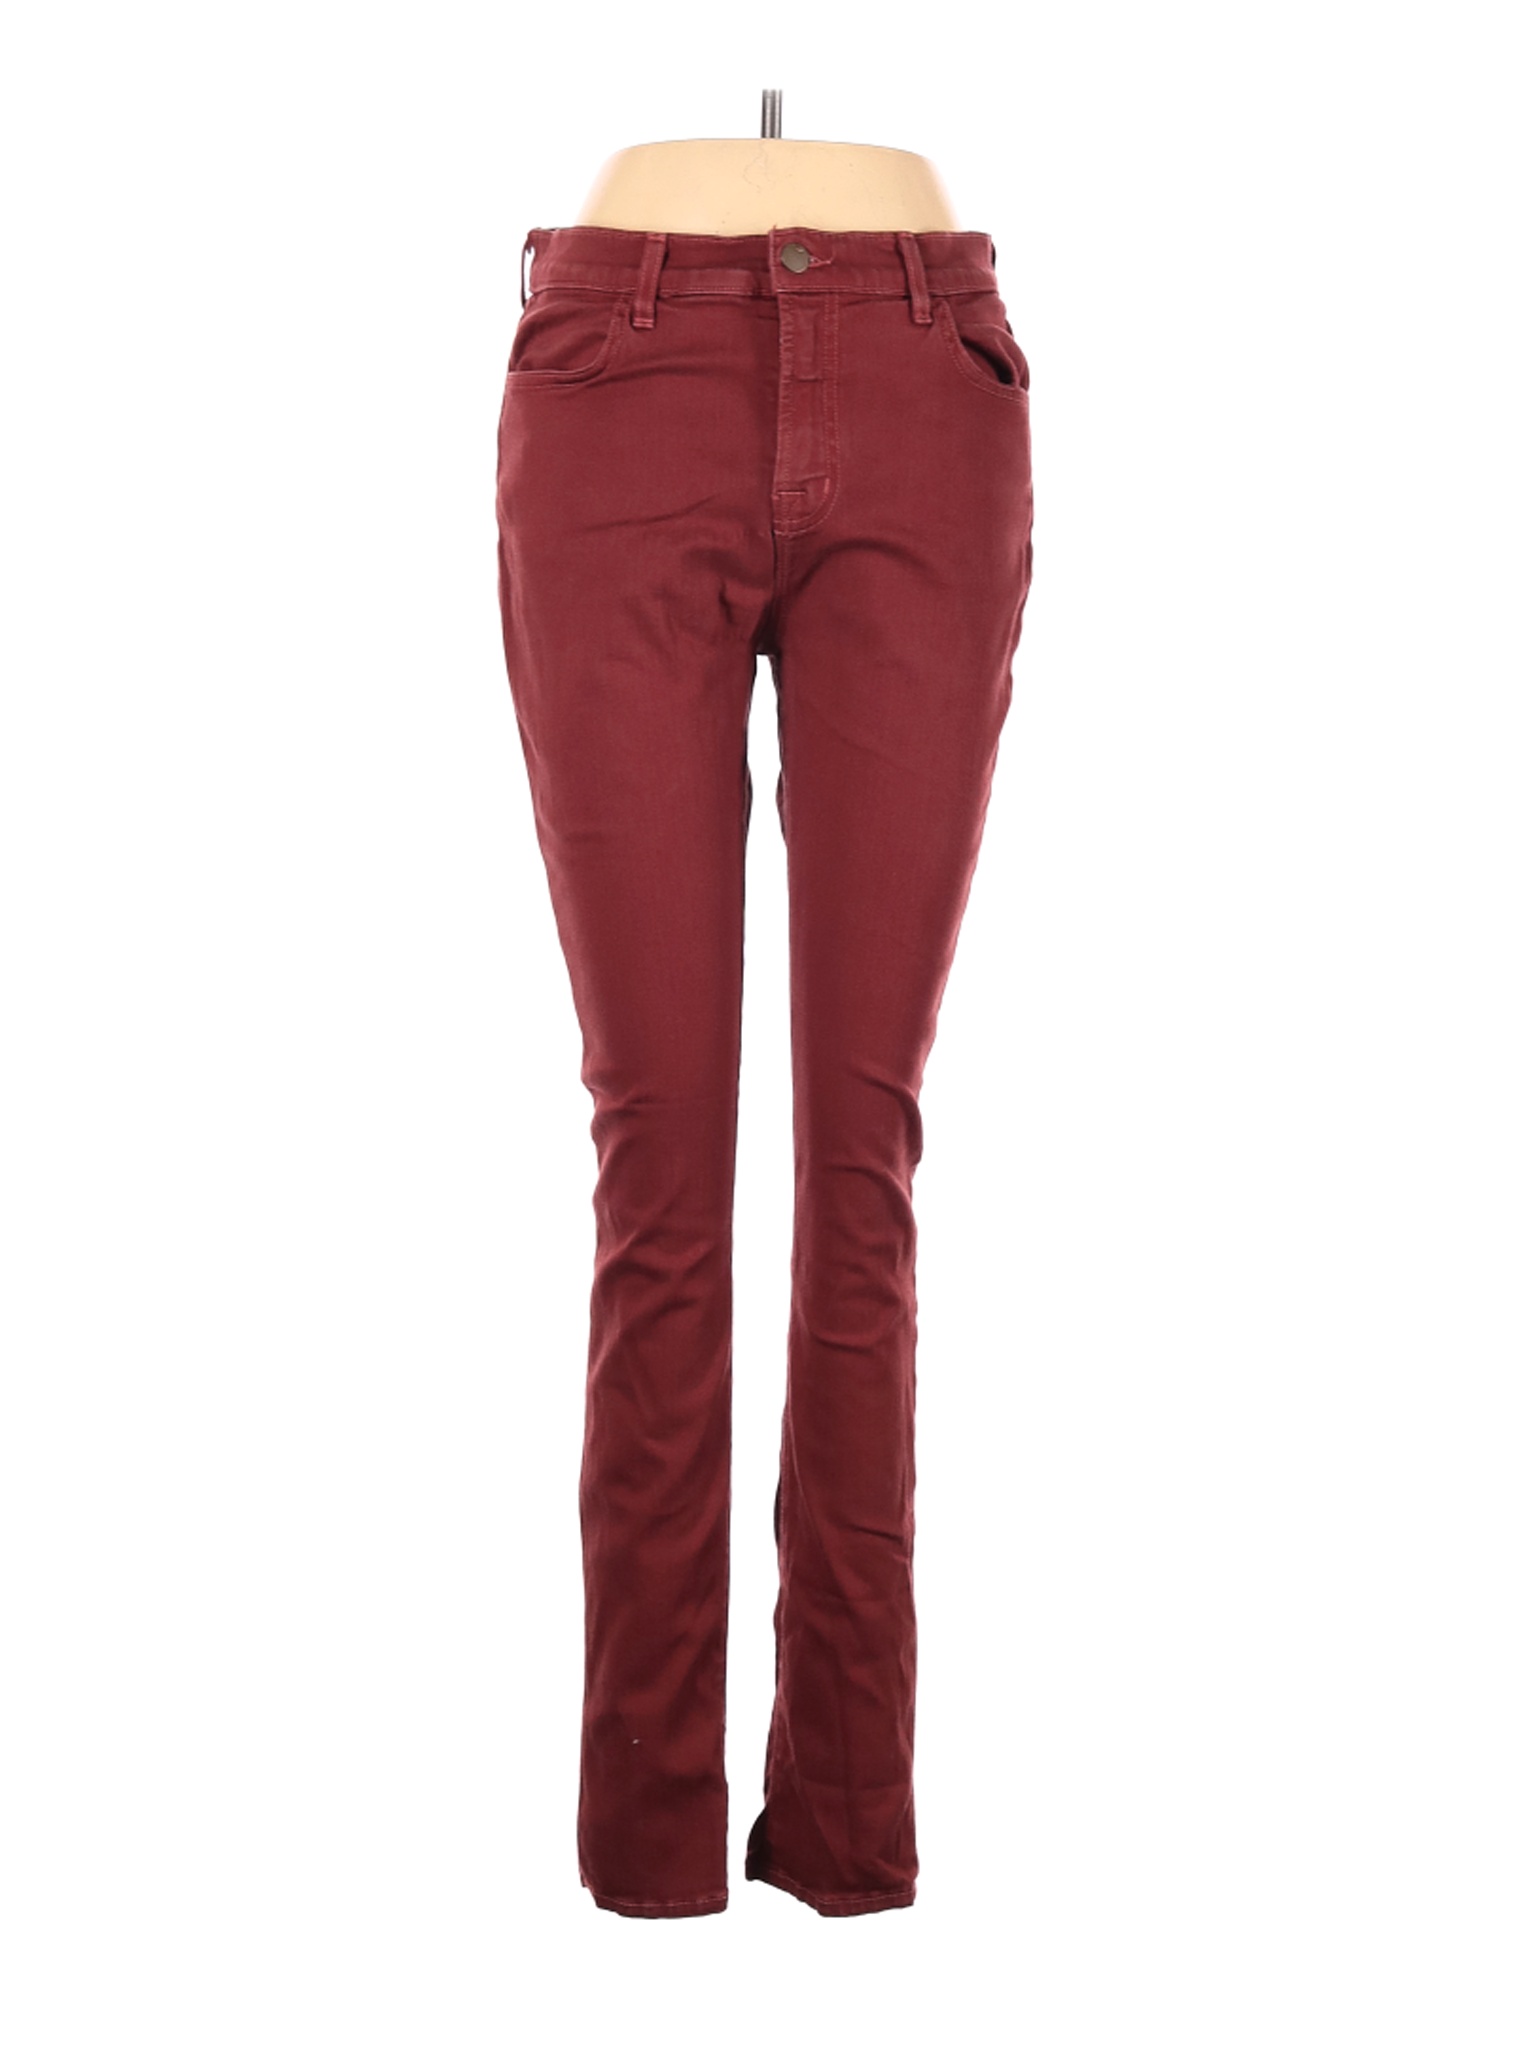 J Brand Women Red Jeans 29W | eBay